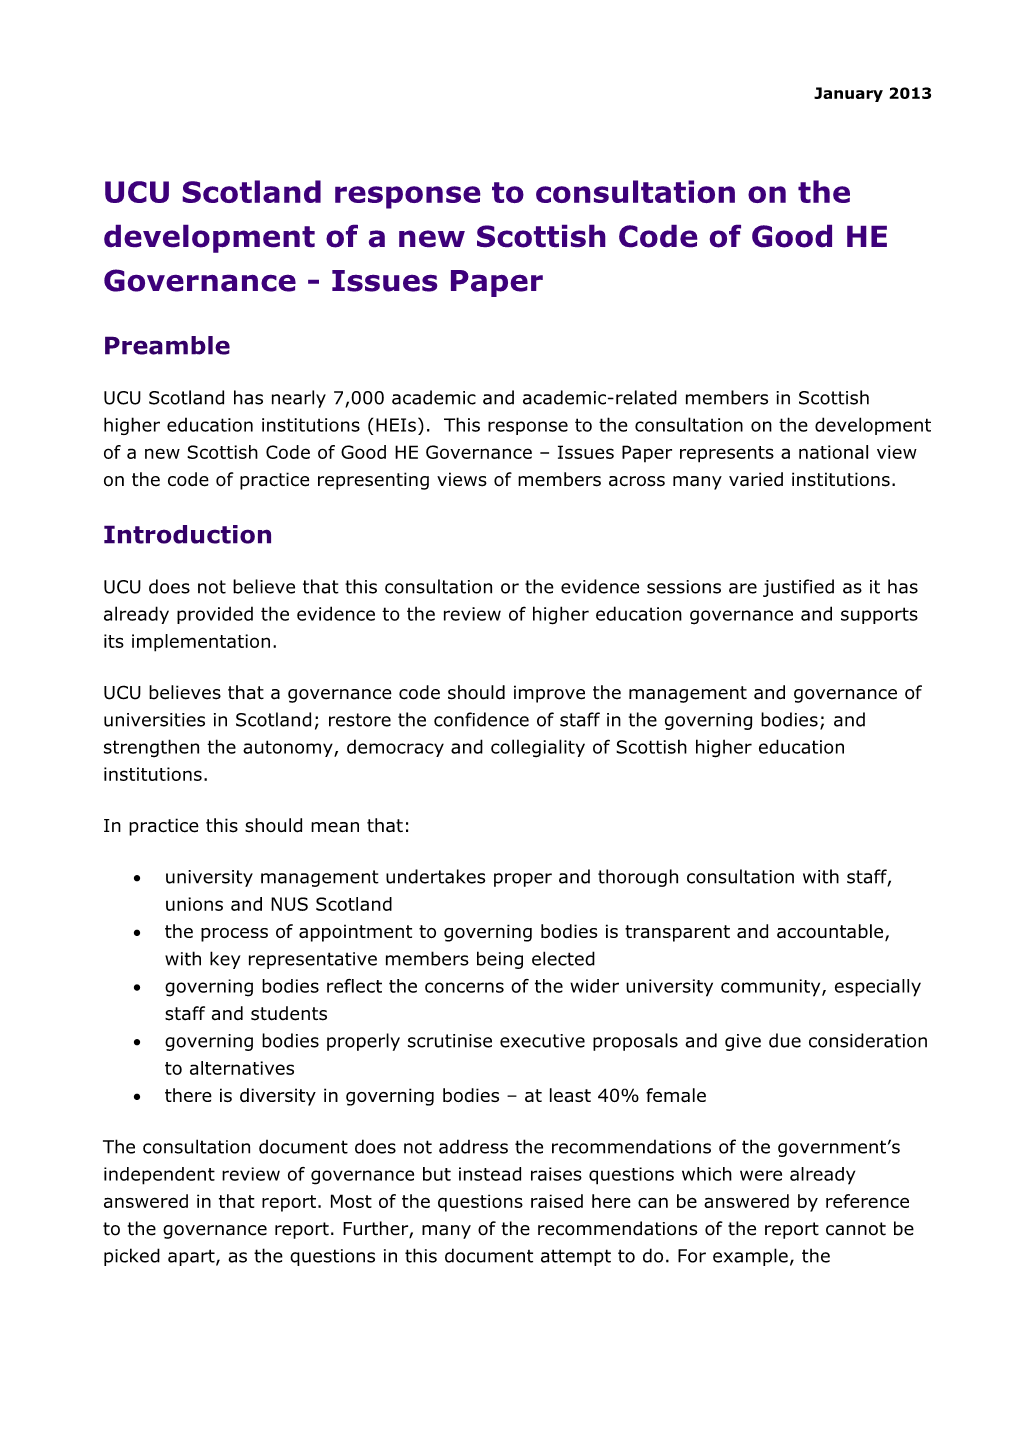 UCU Scotland Response to Consultation on the Development of a New Scottish Code of Good